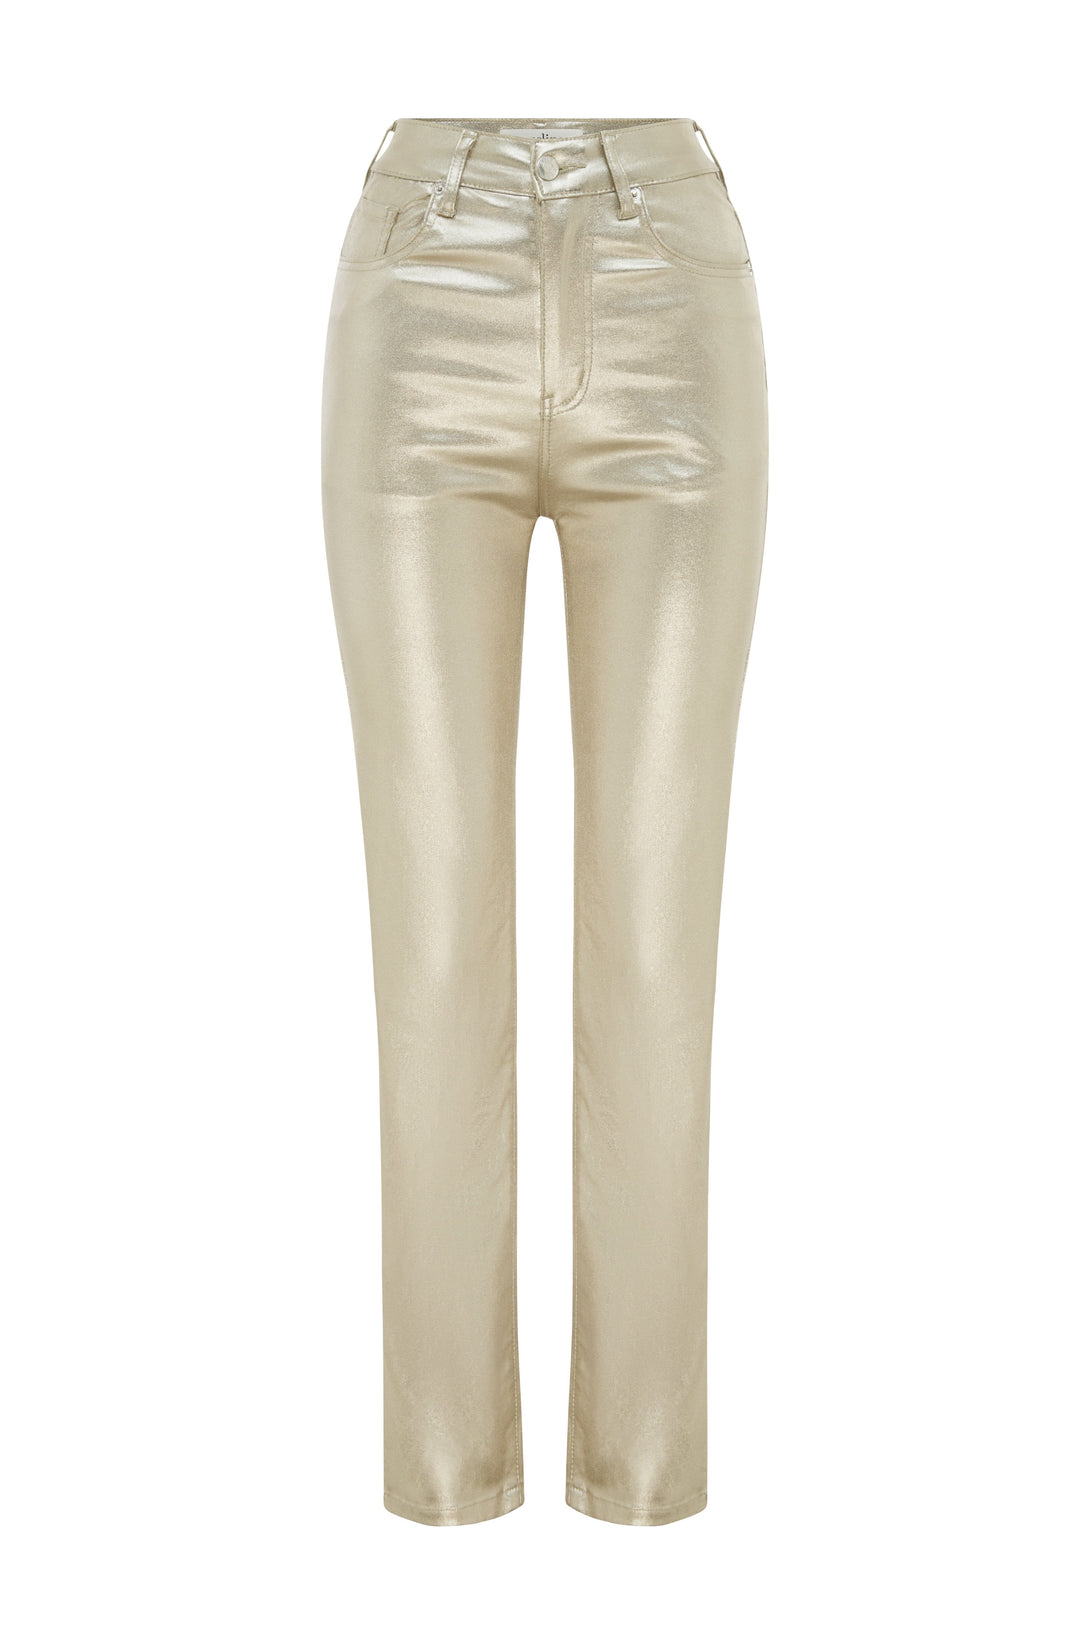 Lucia Metallic Gold Jeans Denim Pants